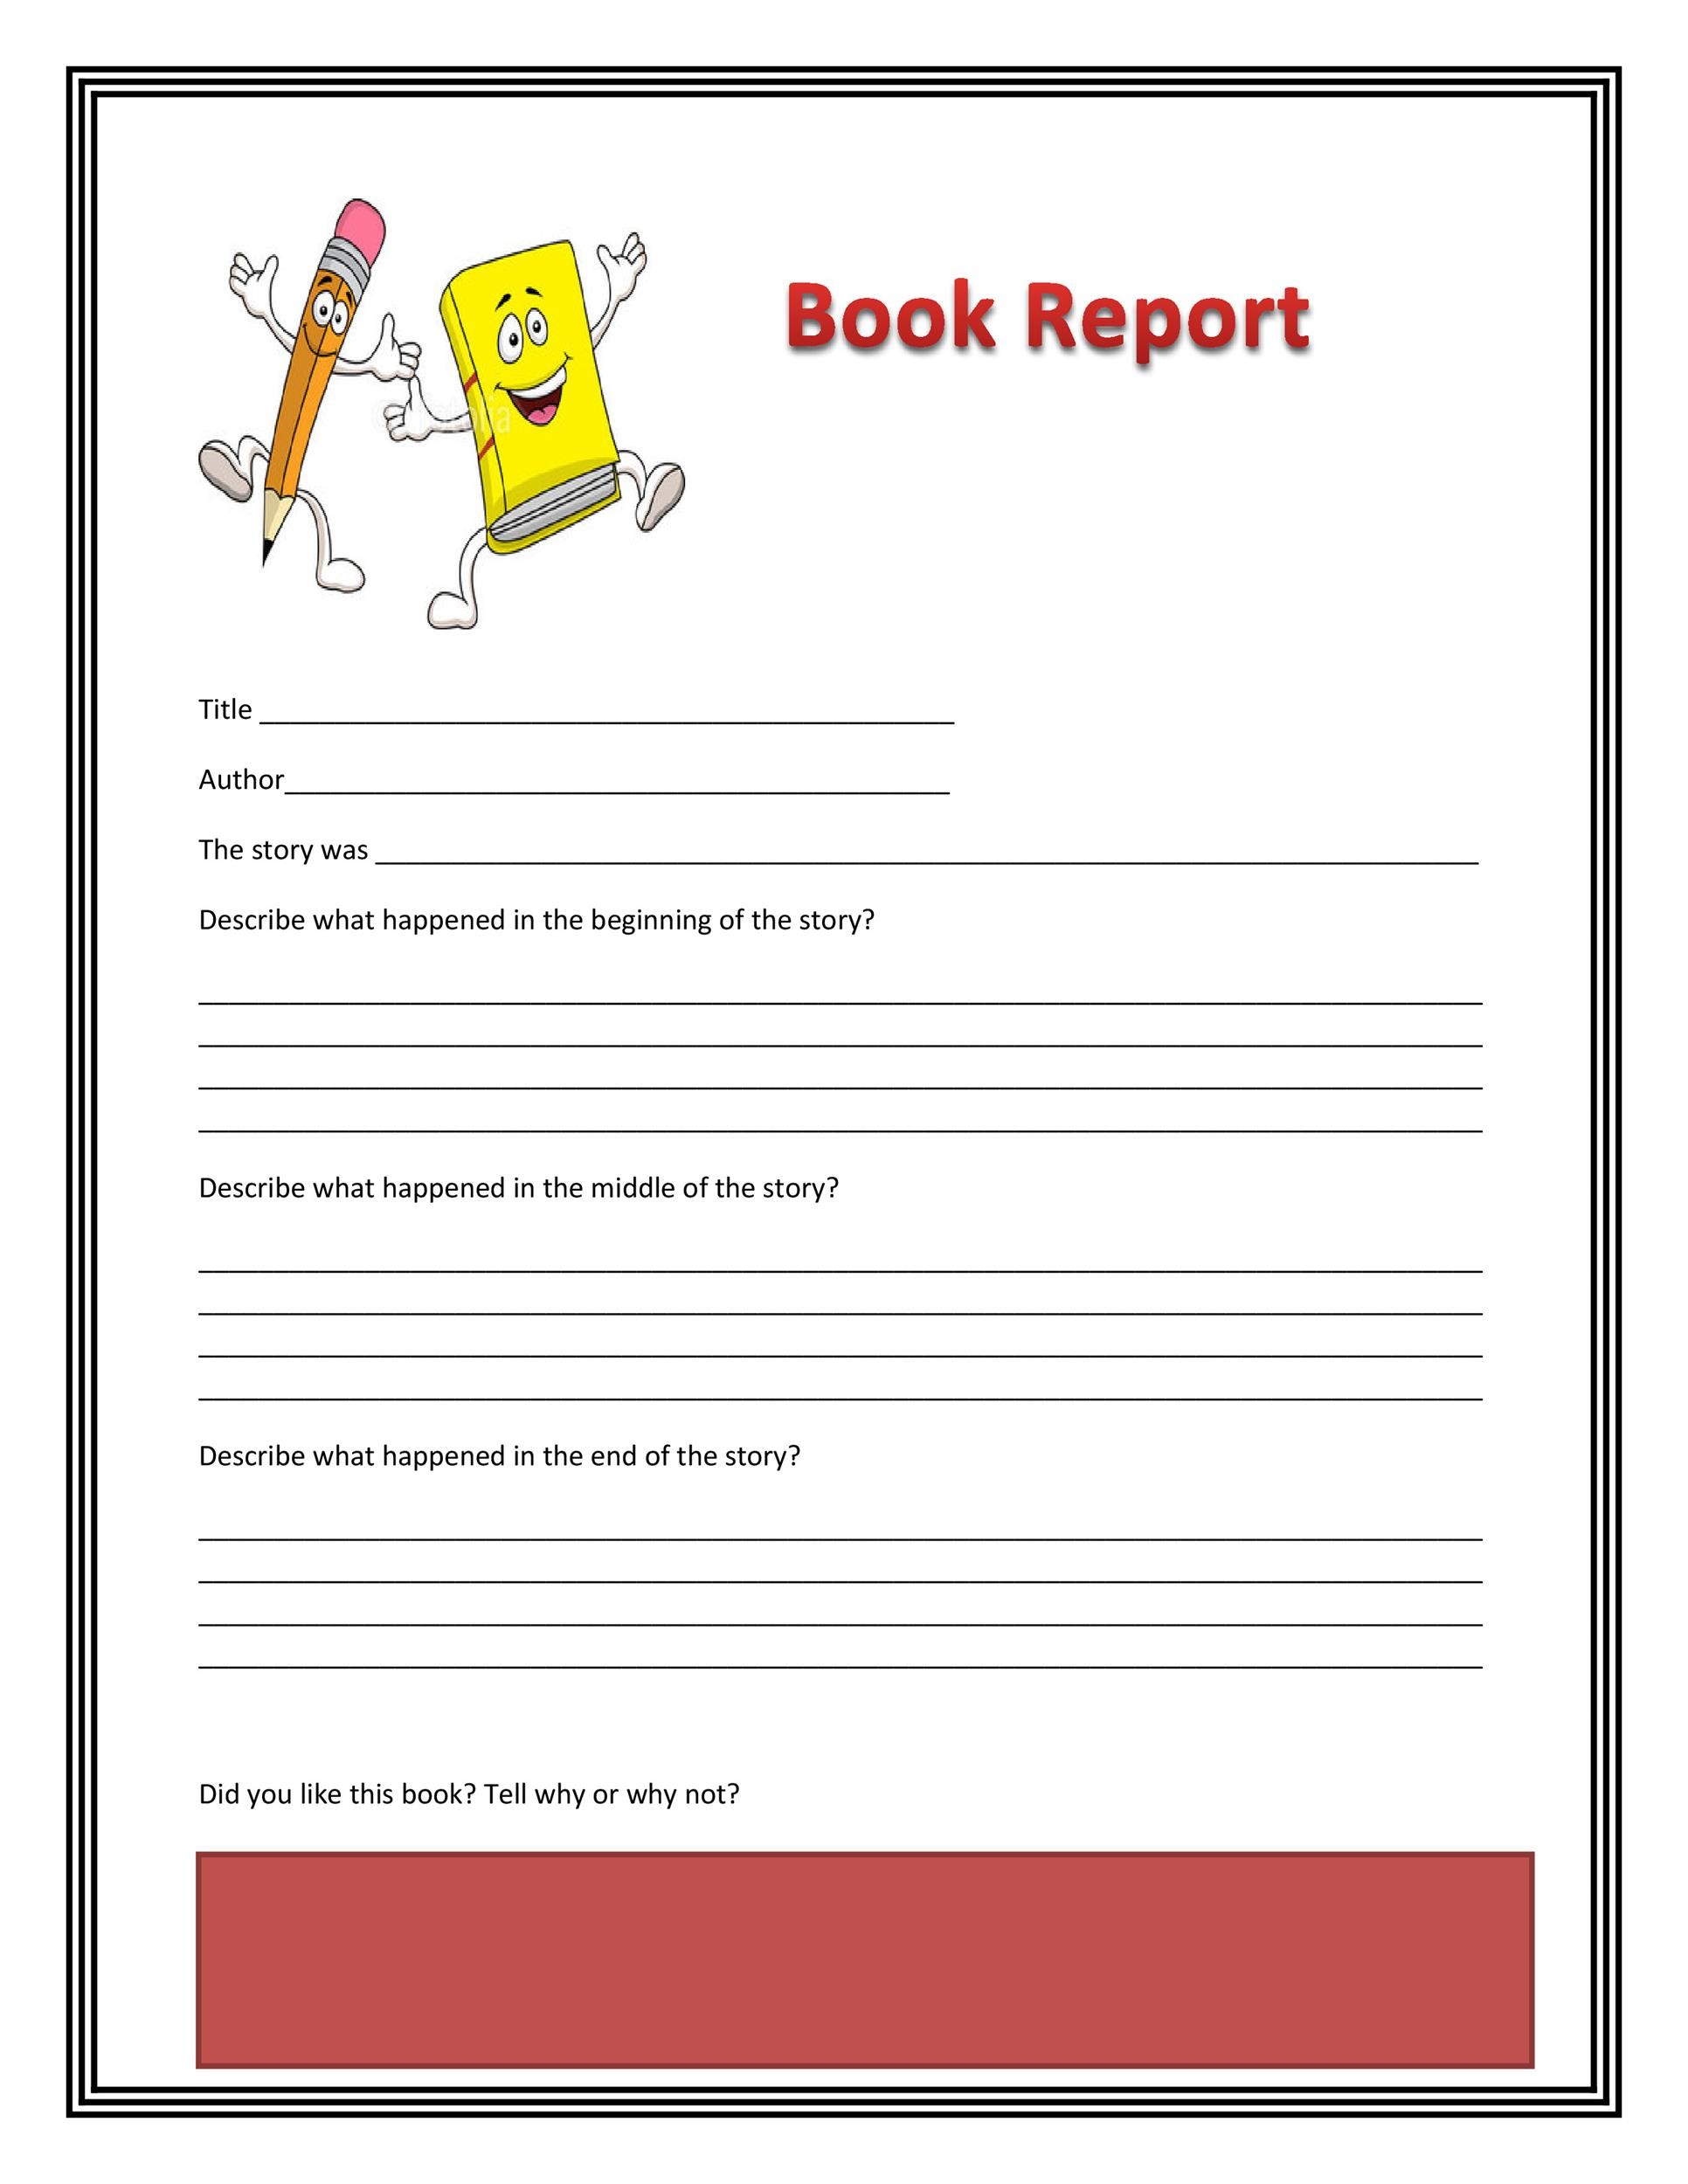 Write my book reports